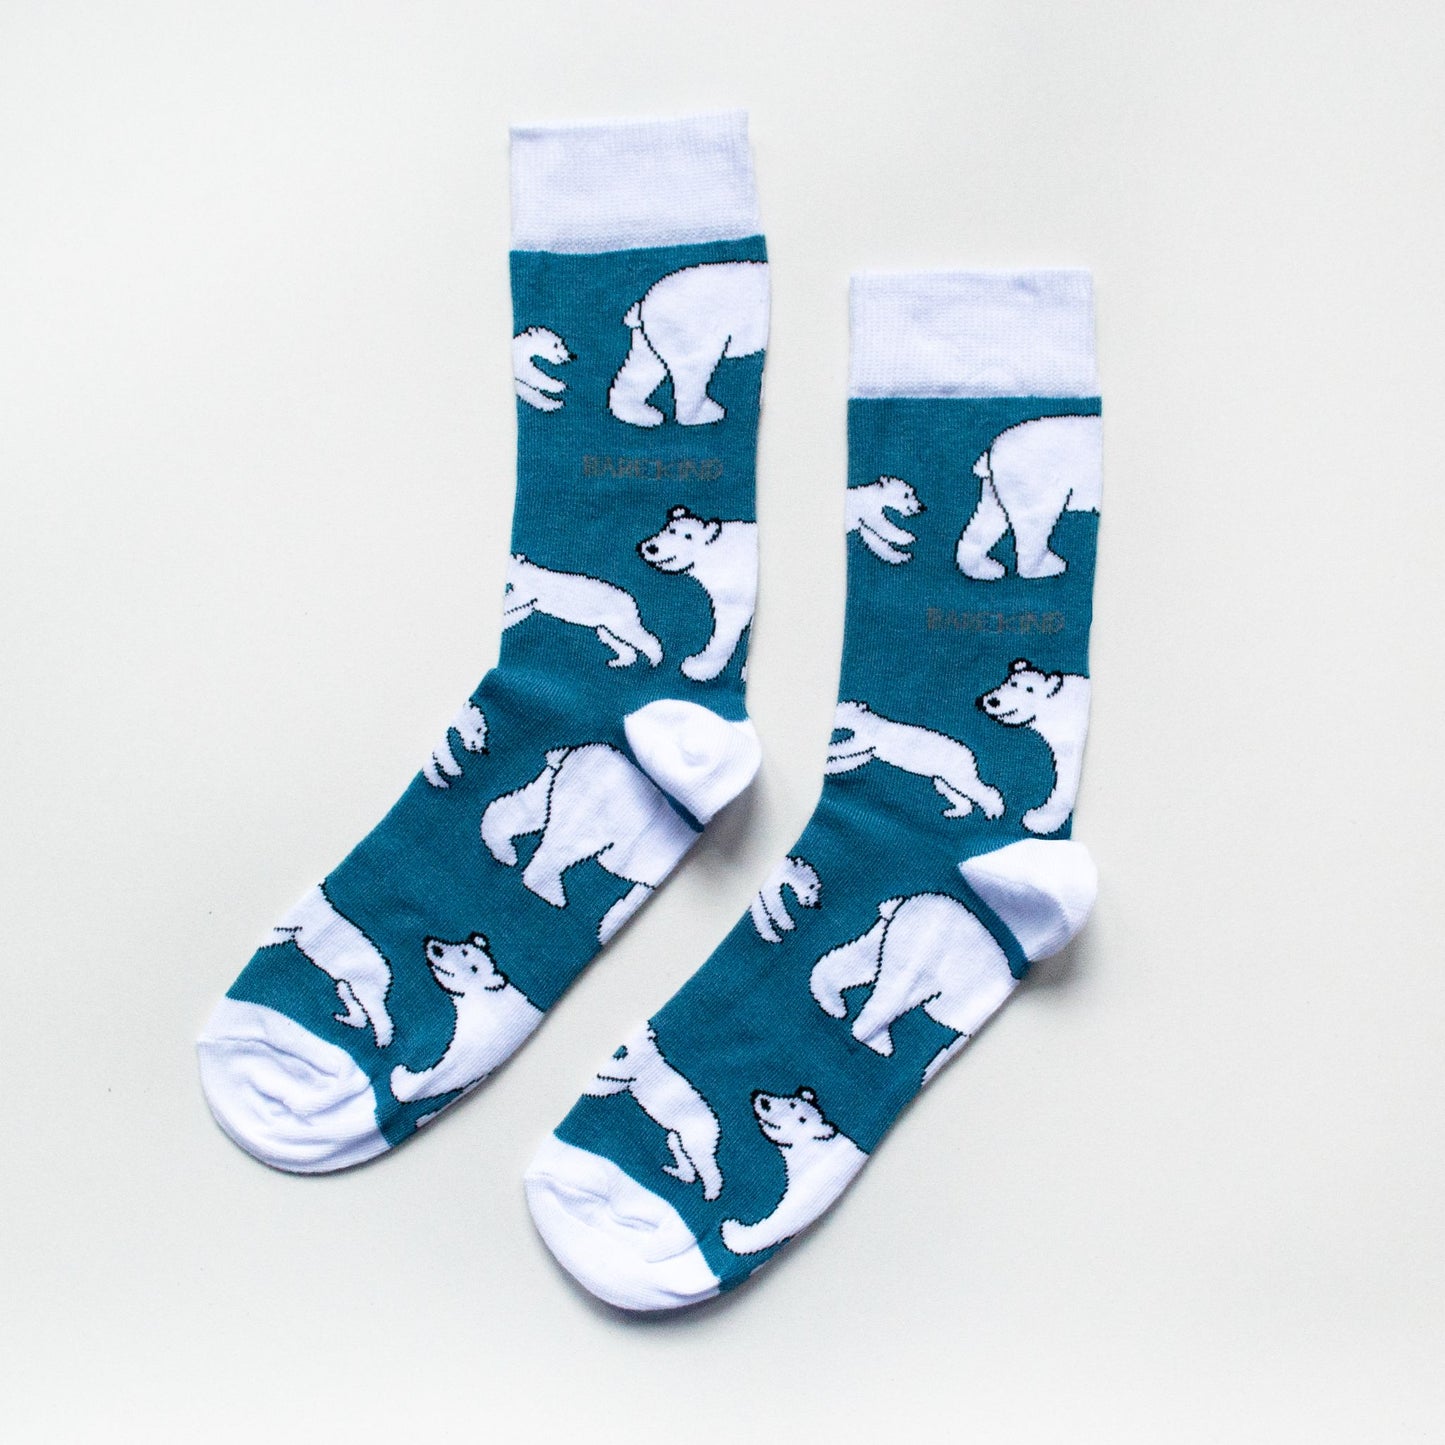 Arctic Socks  Bamboo Socks Gift Box - Polar bear